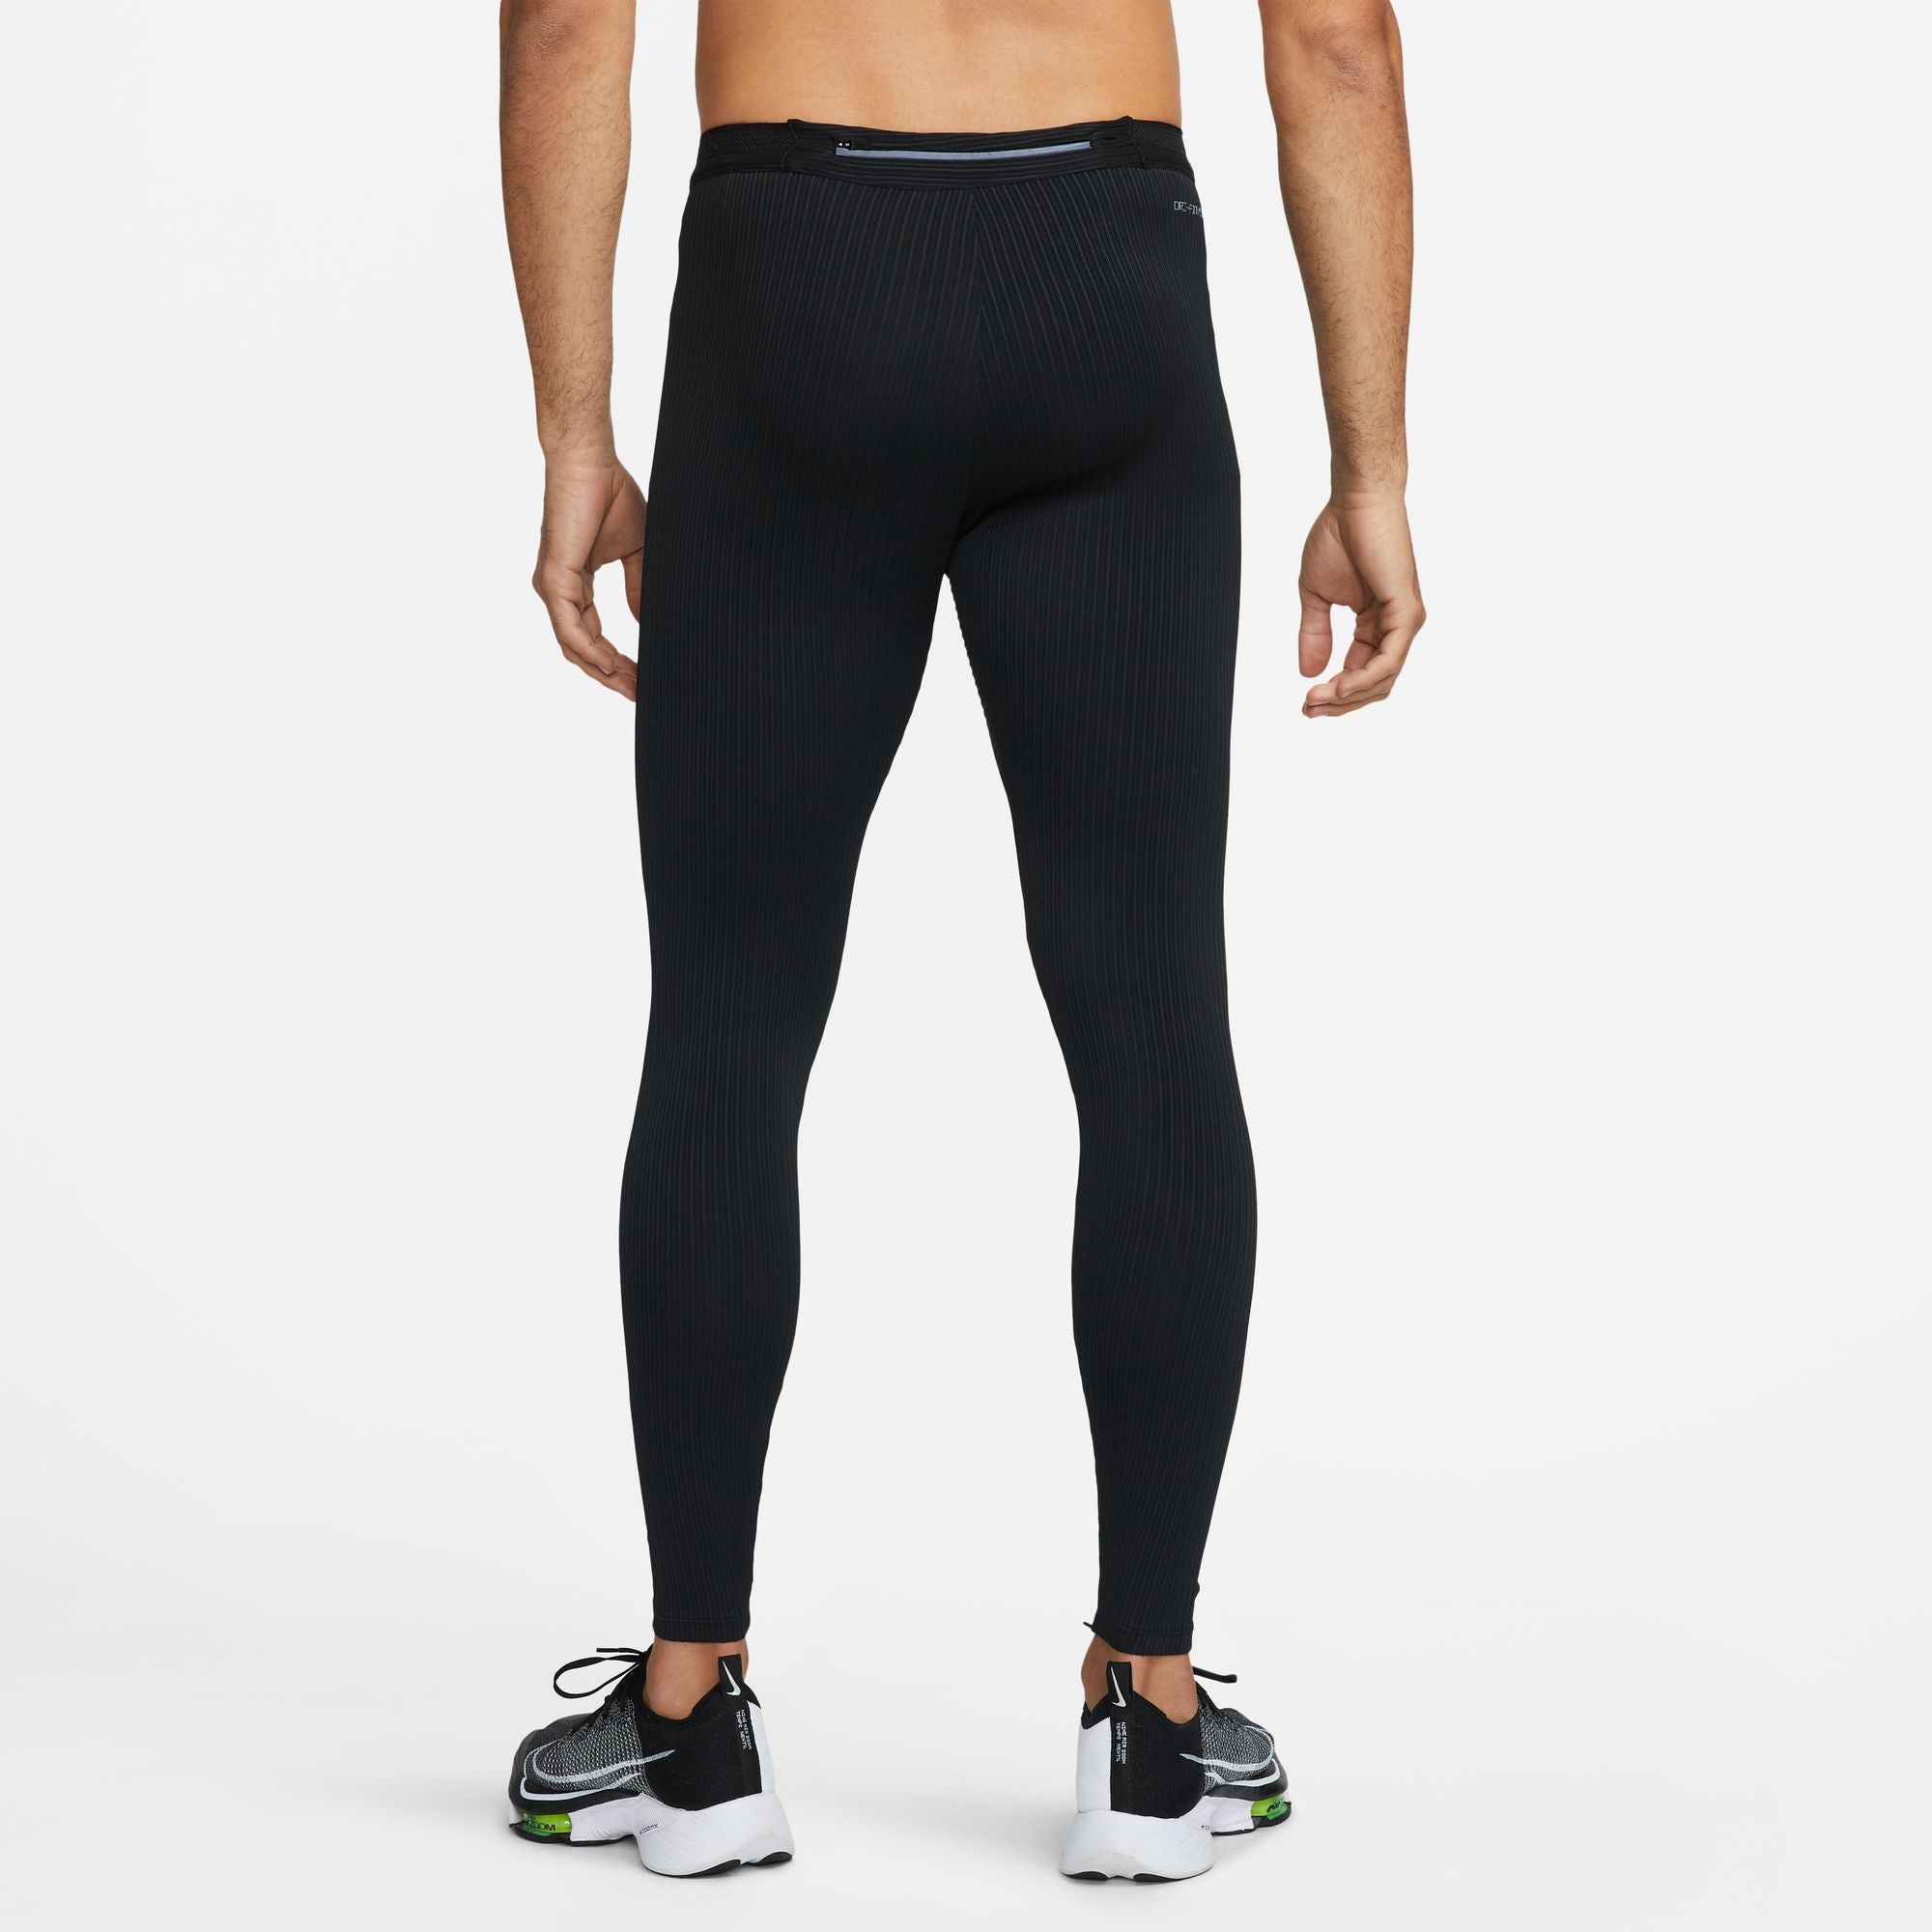 Nike Pro Flash Dri-Fit Reflective Running Tights Leggings Size Small